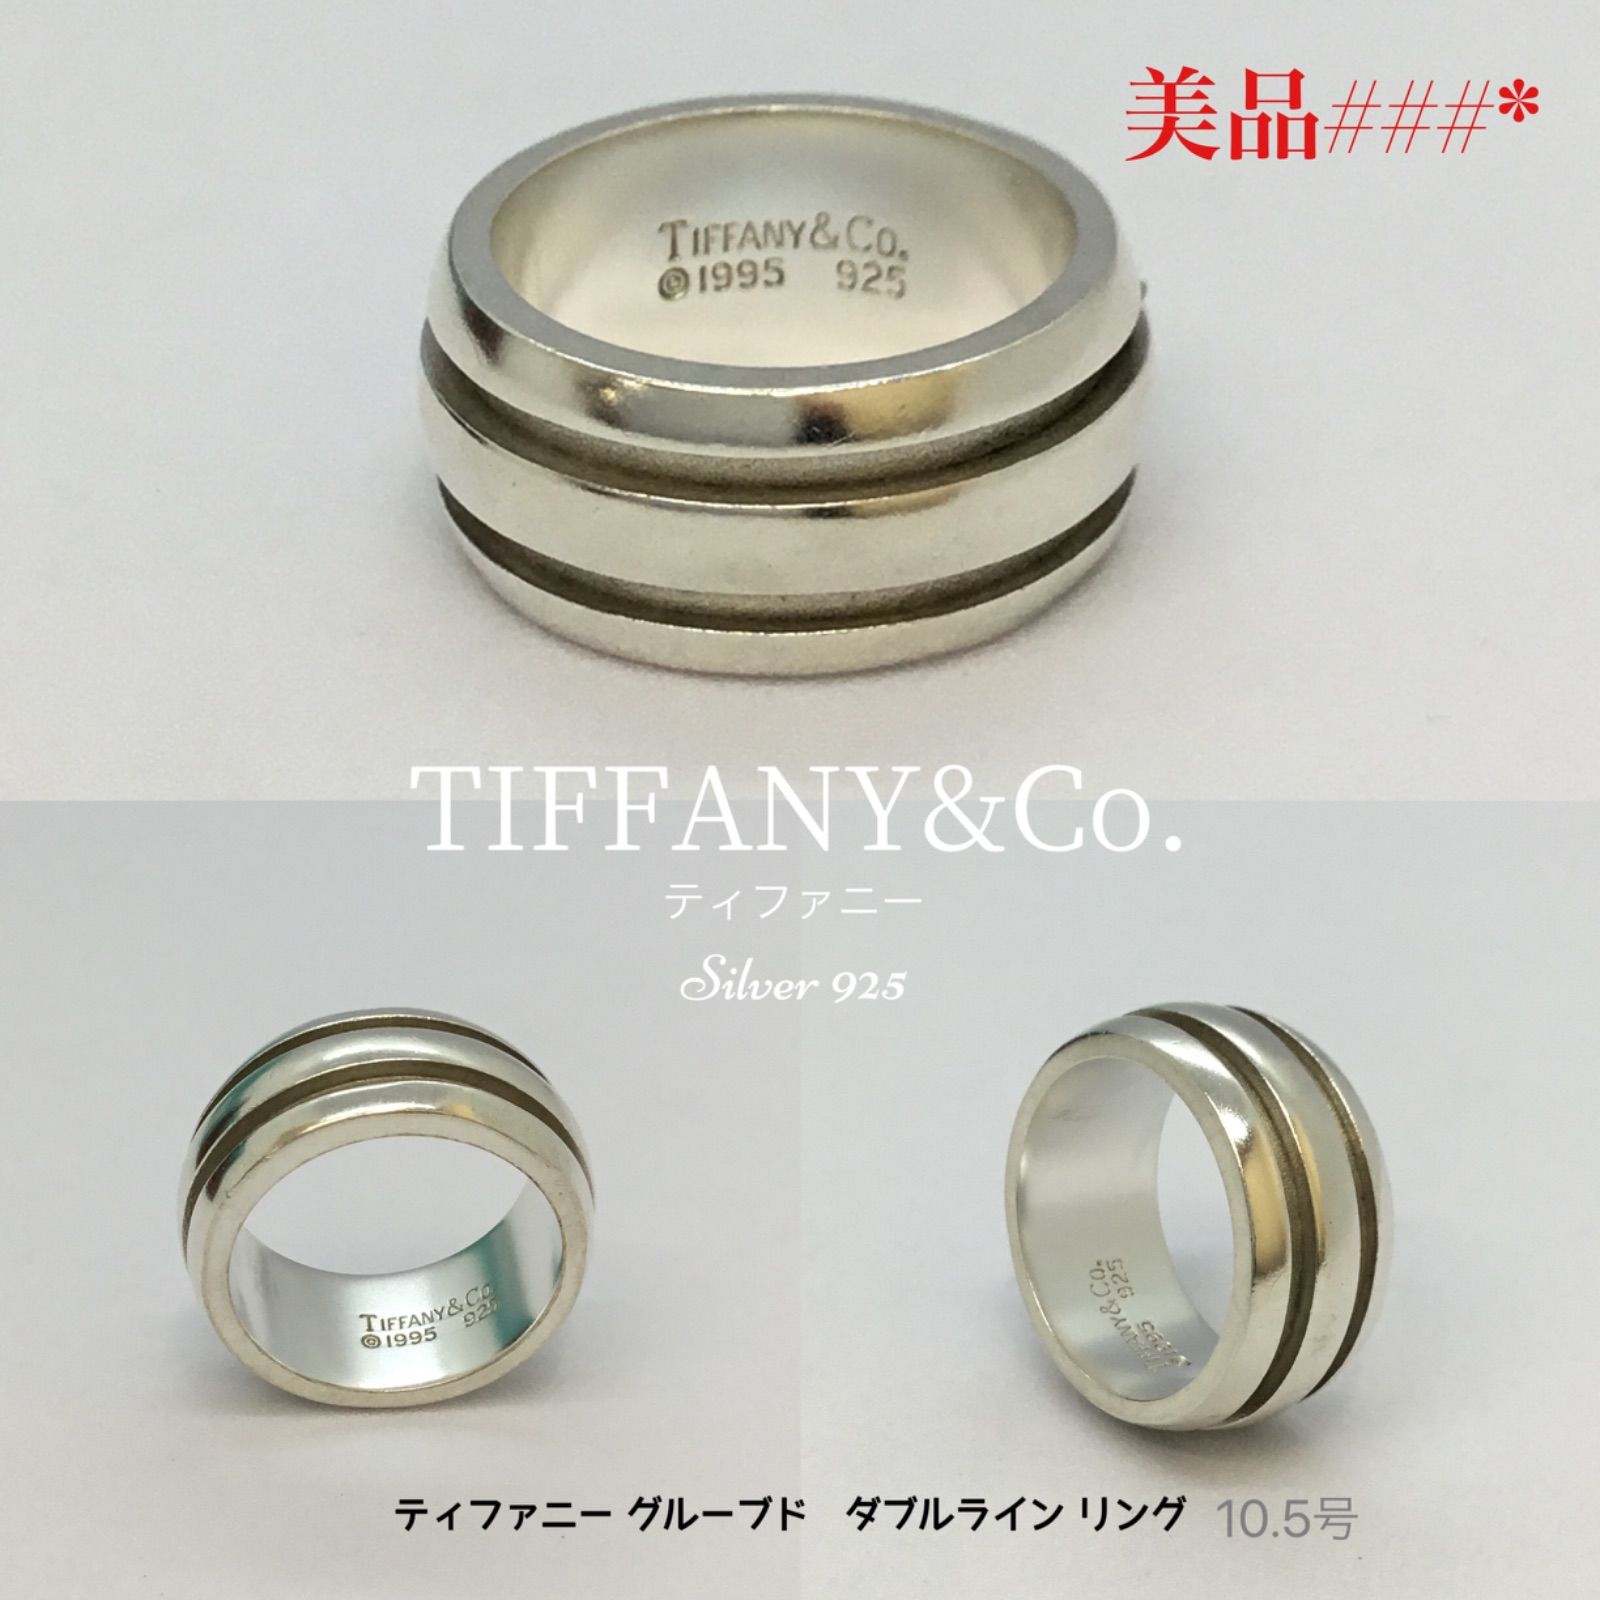 TIFFANY&Co. ティファニー グルーブ ド ダブルラインリング - アクセサリー